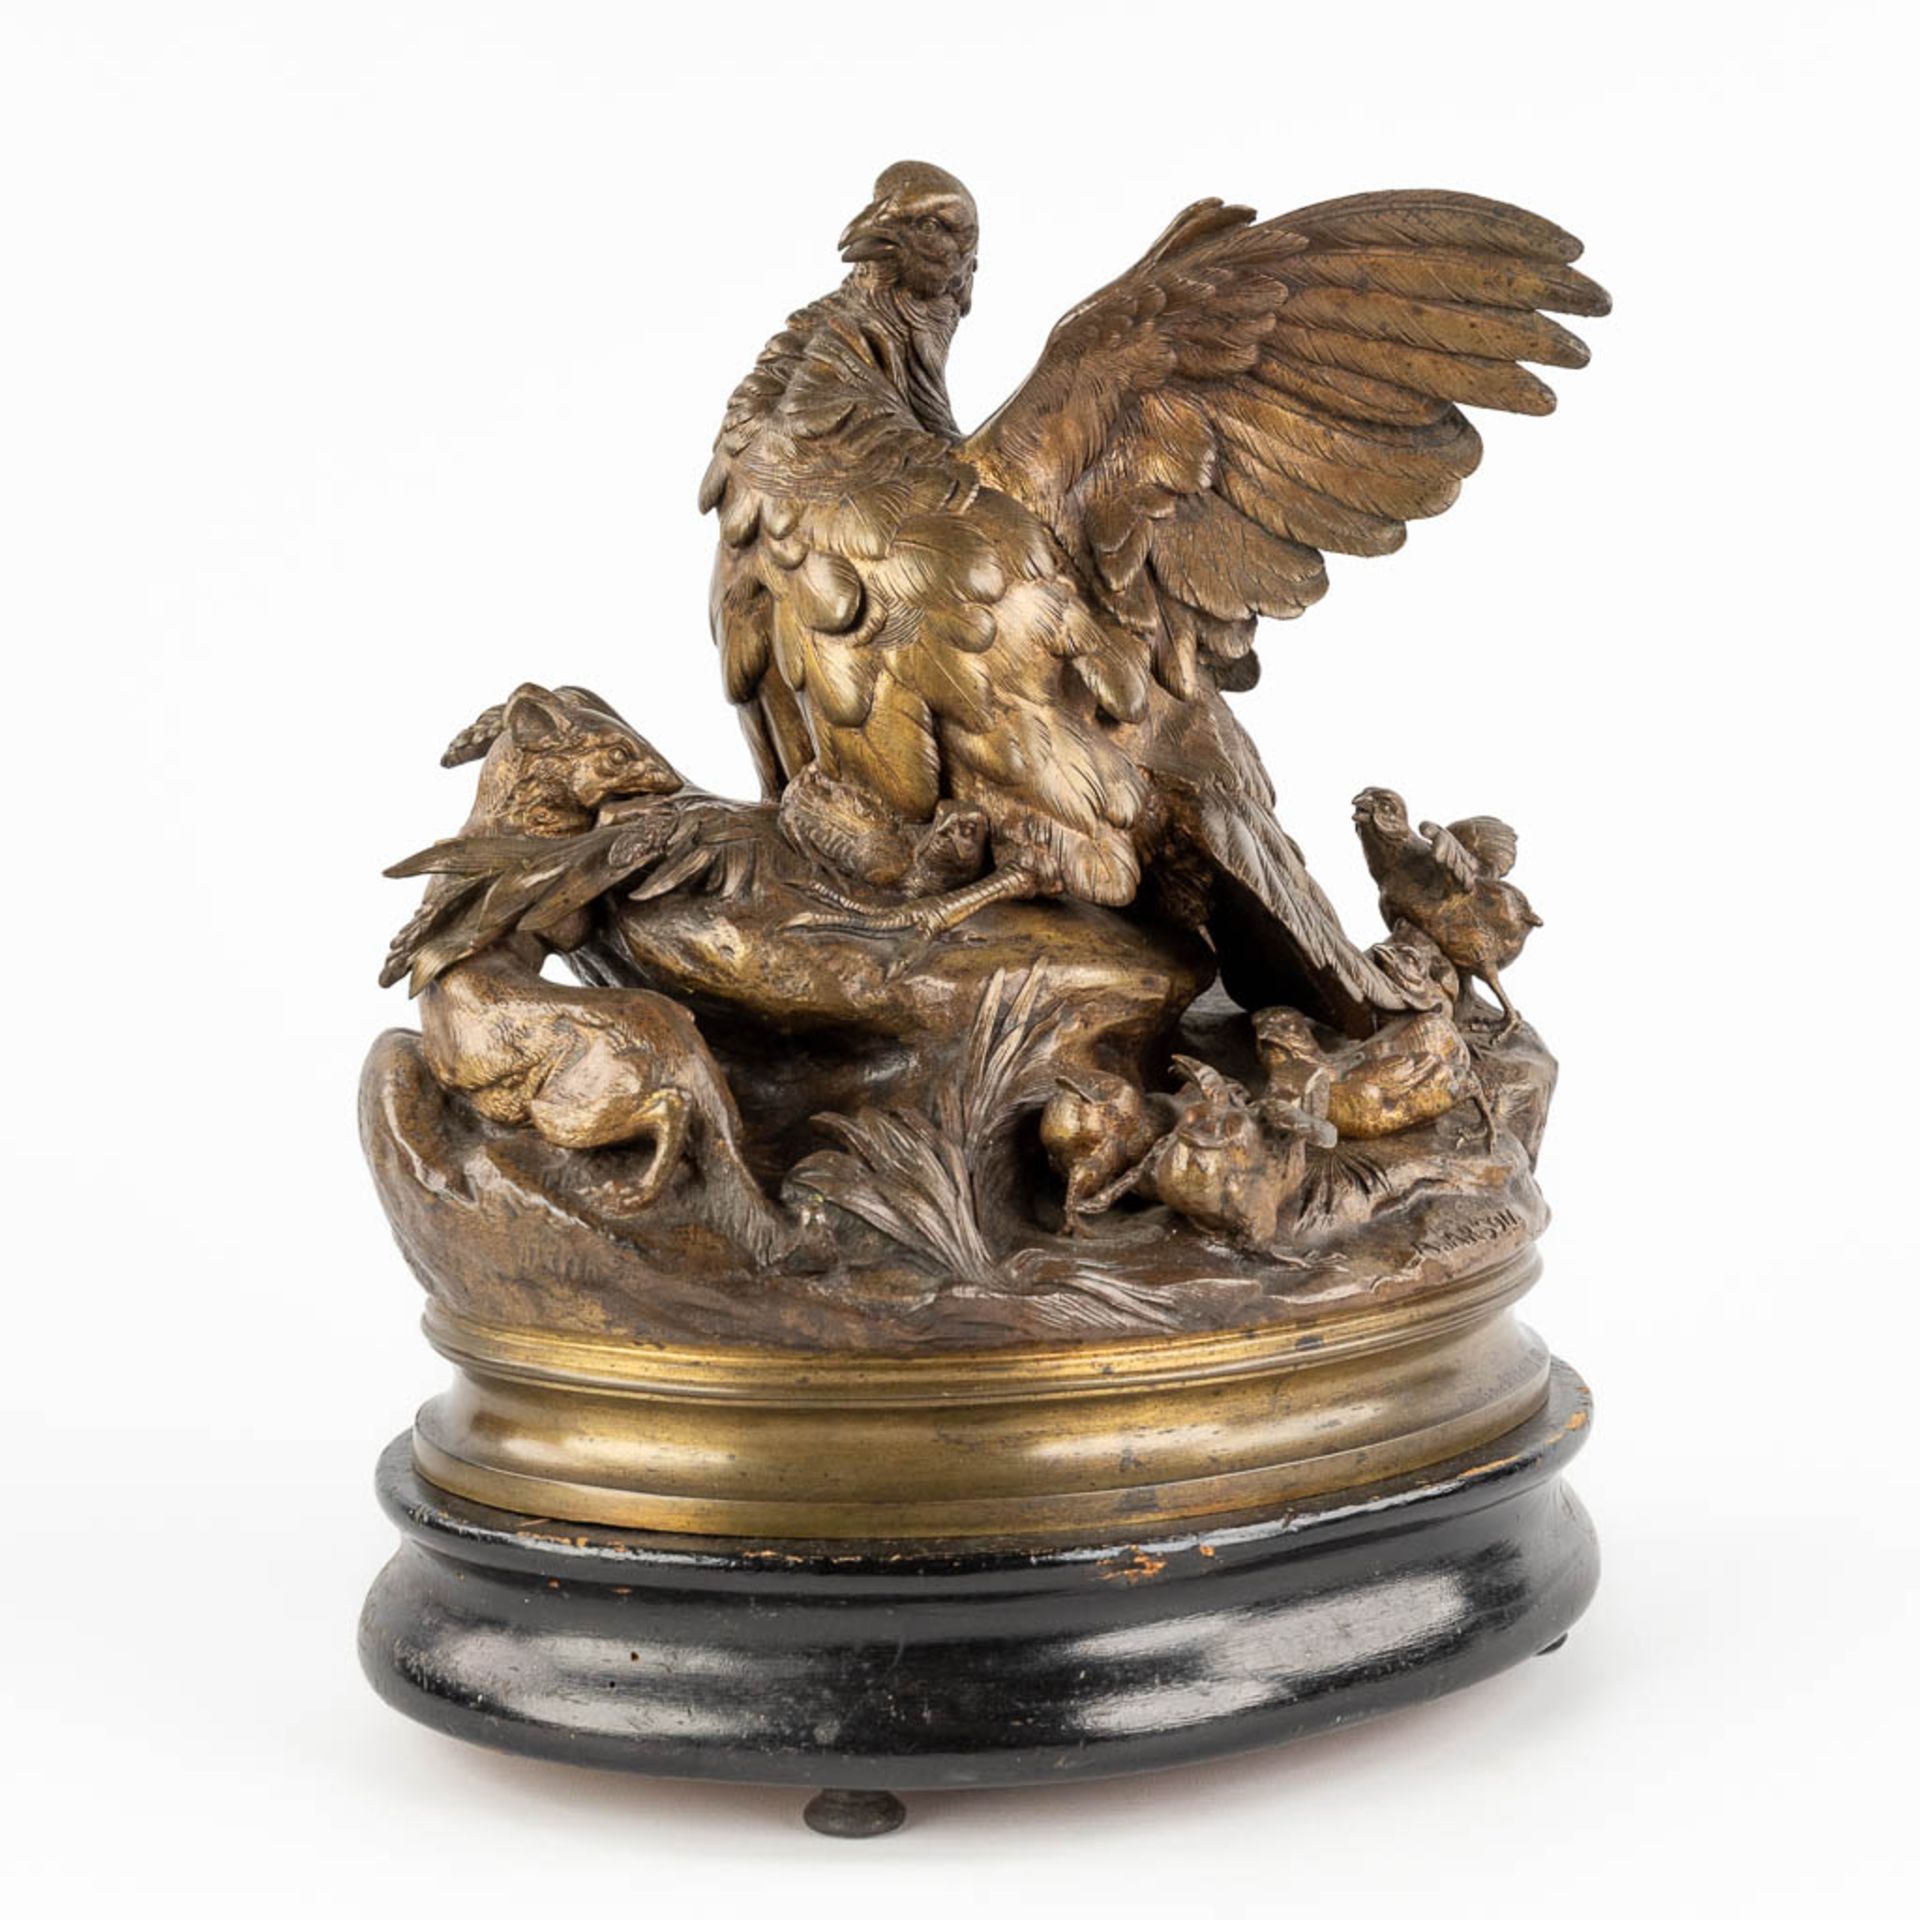 Alphonse ARSON (1822-1895) 'Bataille' patinated bronze. 1867. (D:24 x W:34 x H:38 cm) - Image 3 of 14